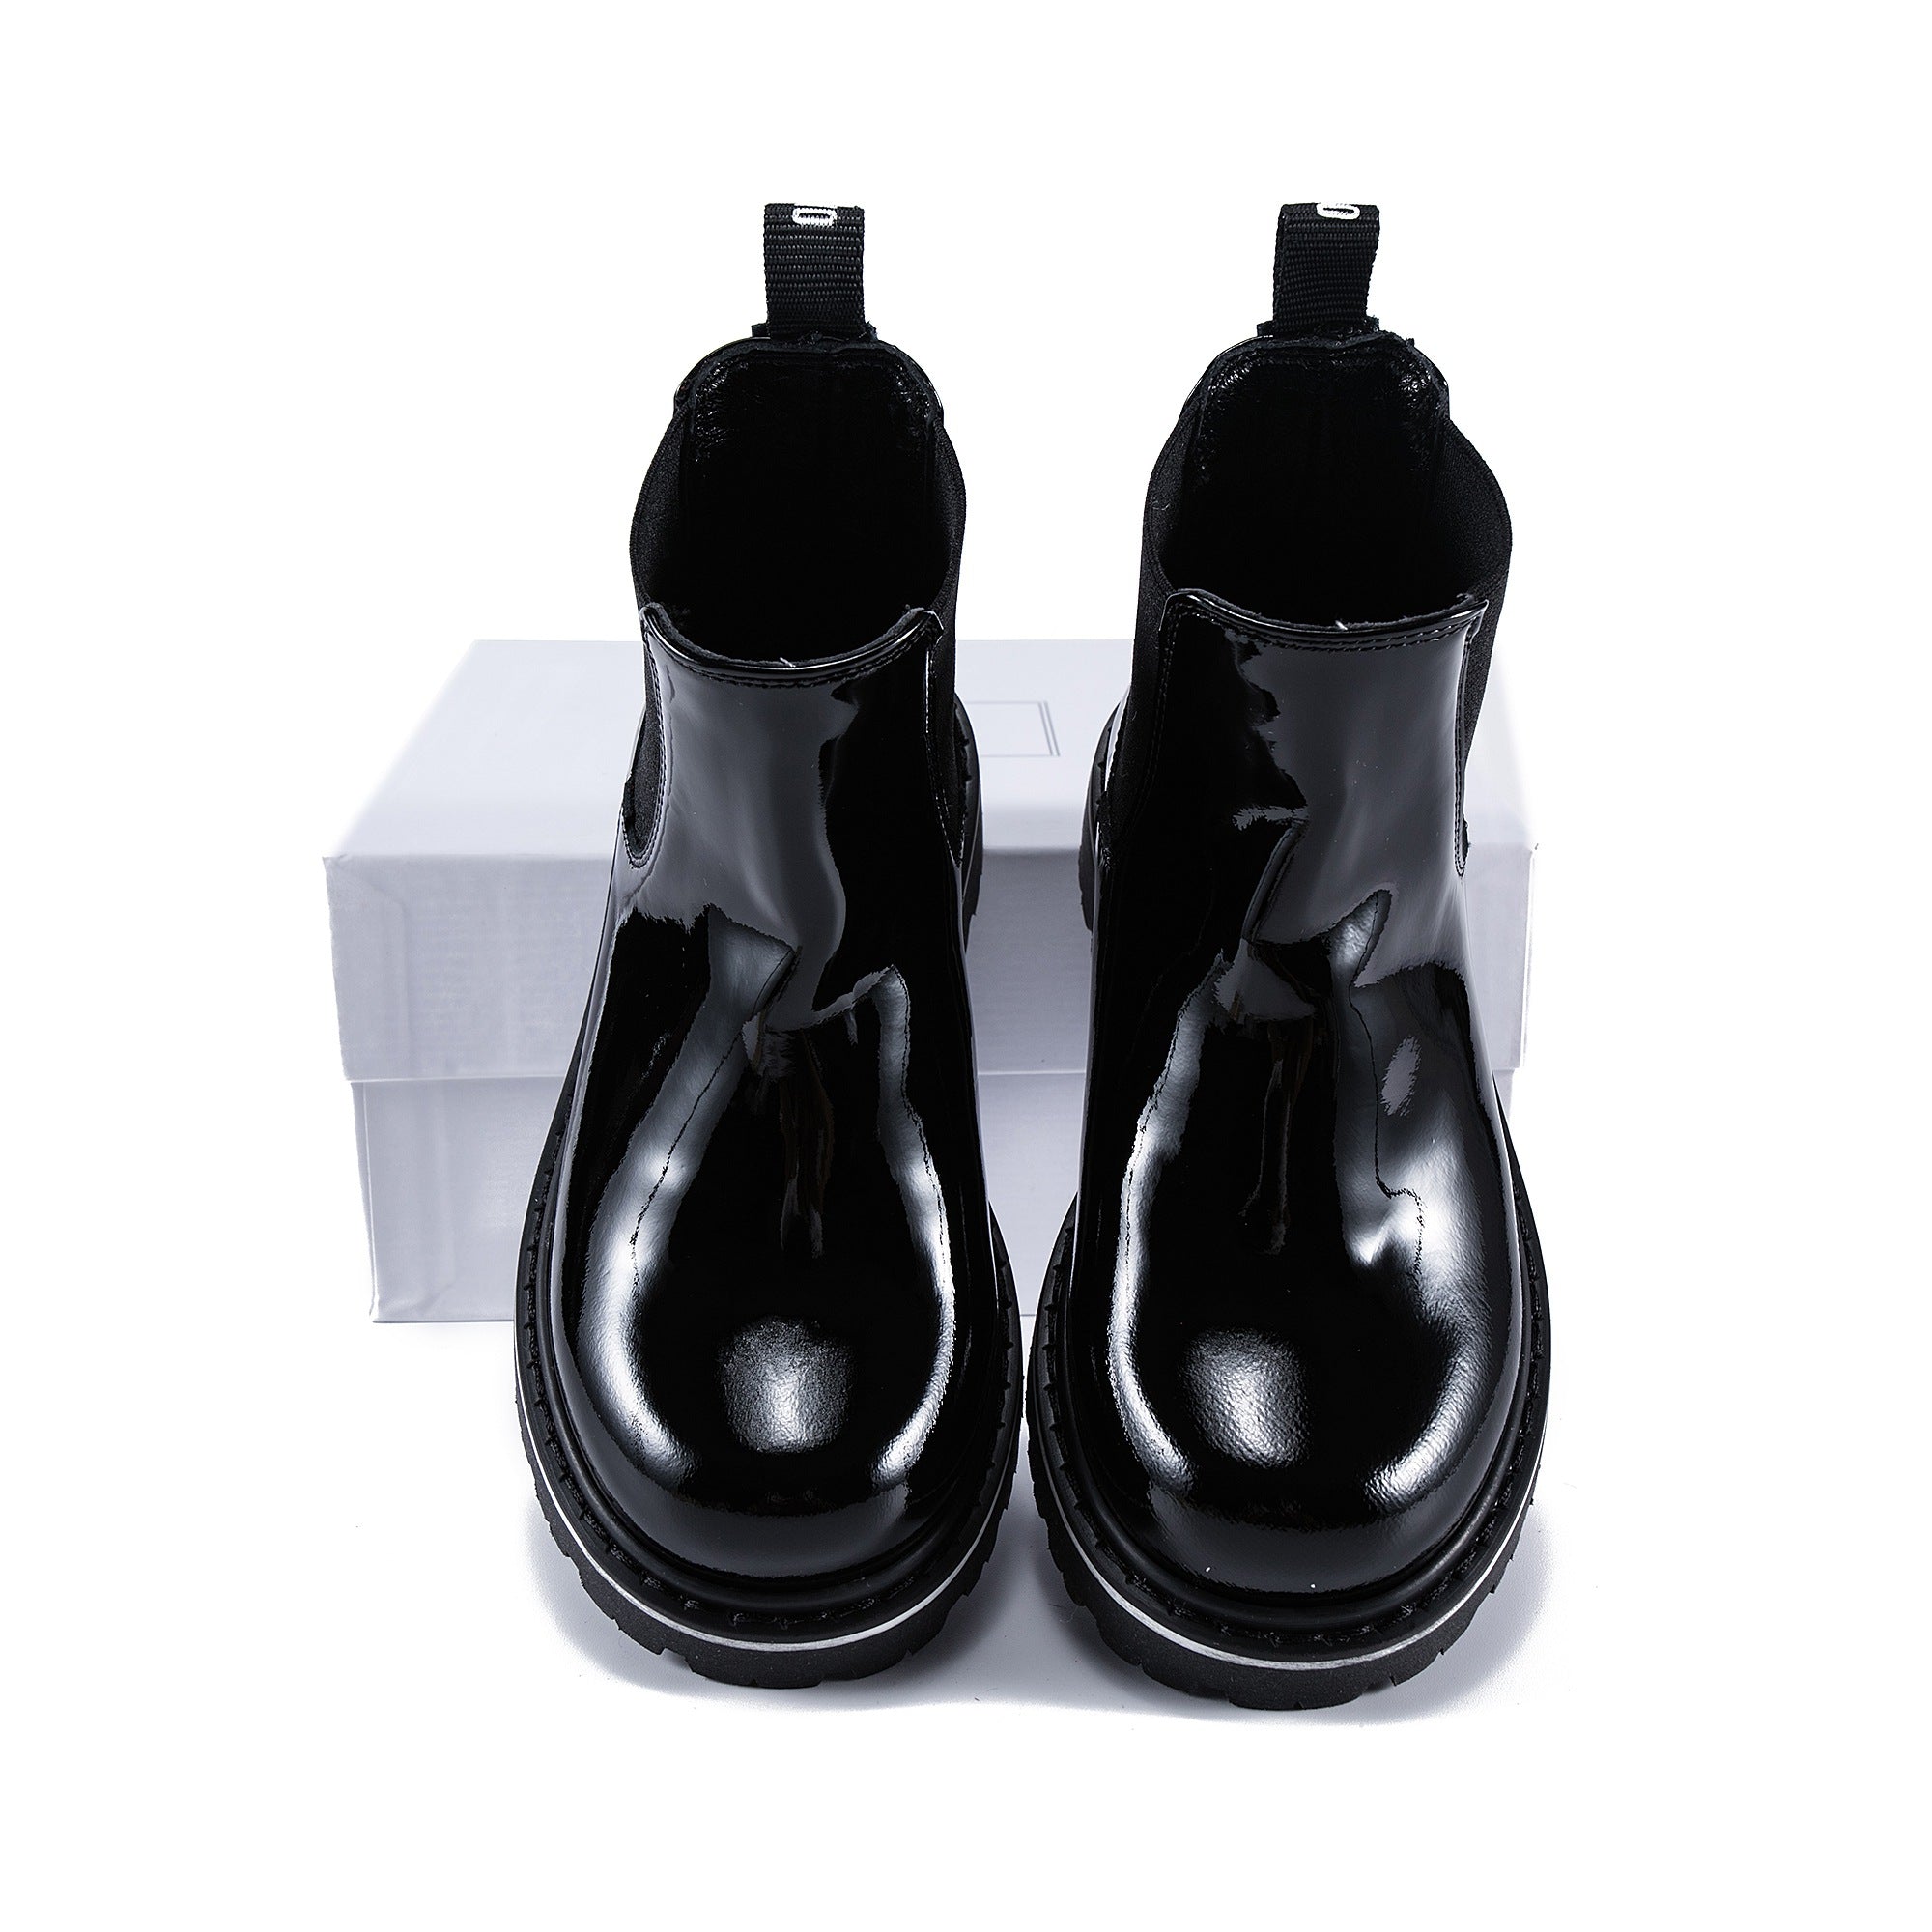 Boys & Girls Black Beatles Patch Boots